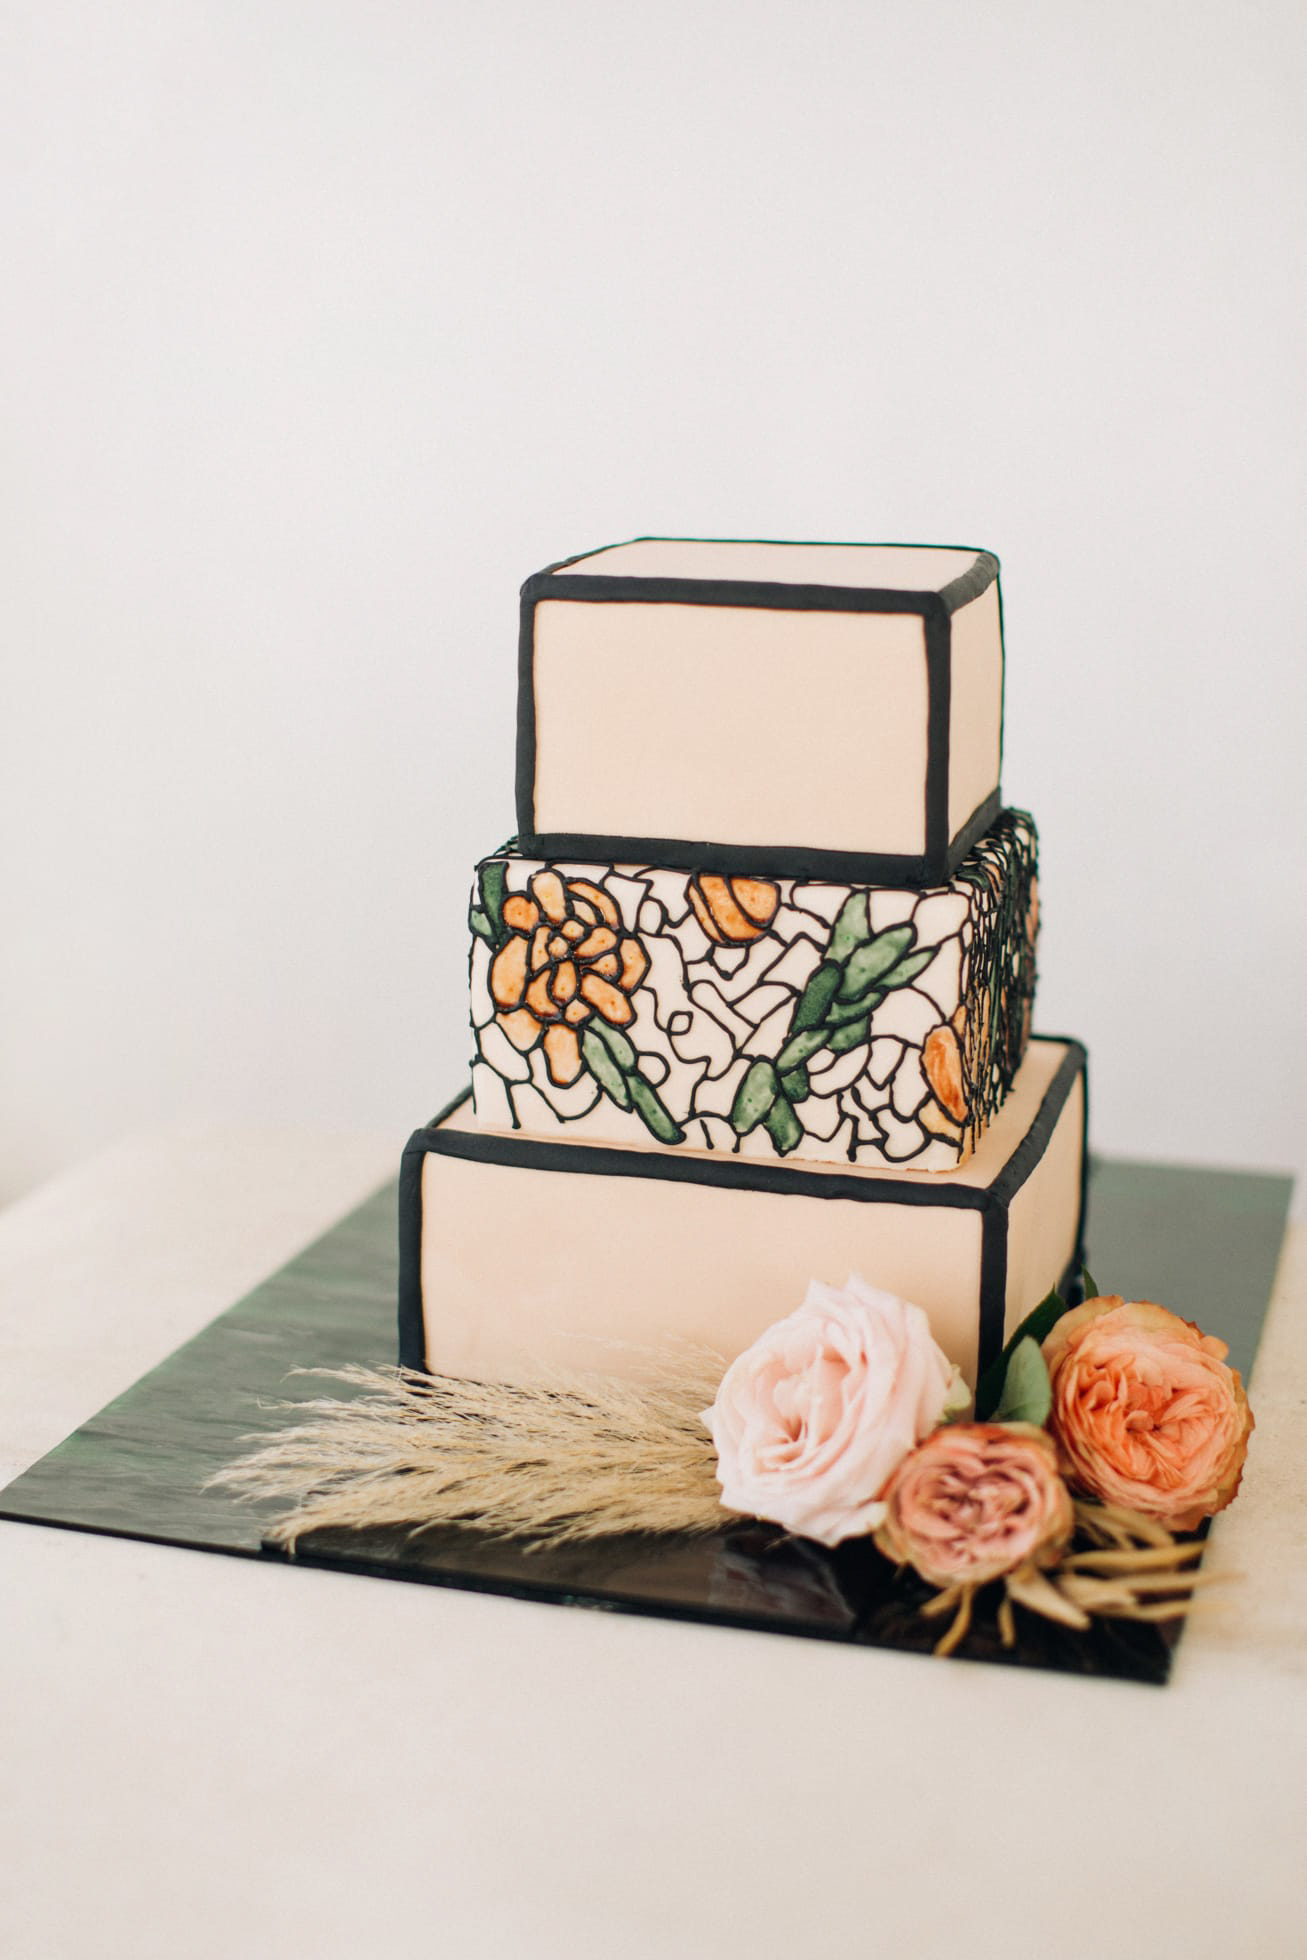 A novelty Art Nouveau wedding cake inspiration in Santorini.